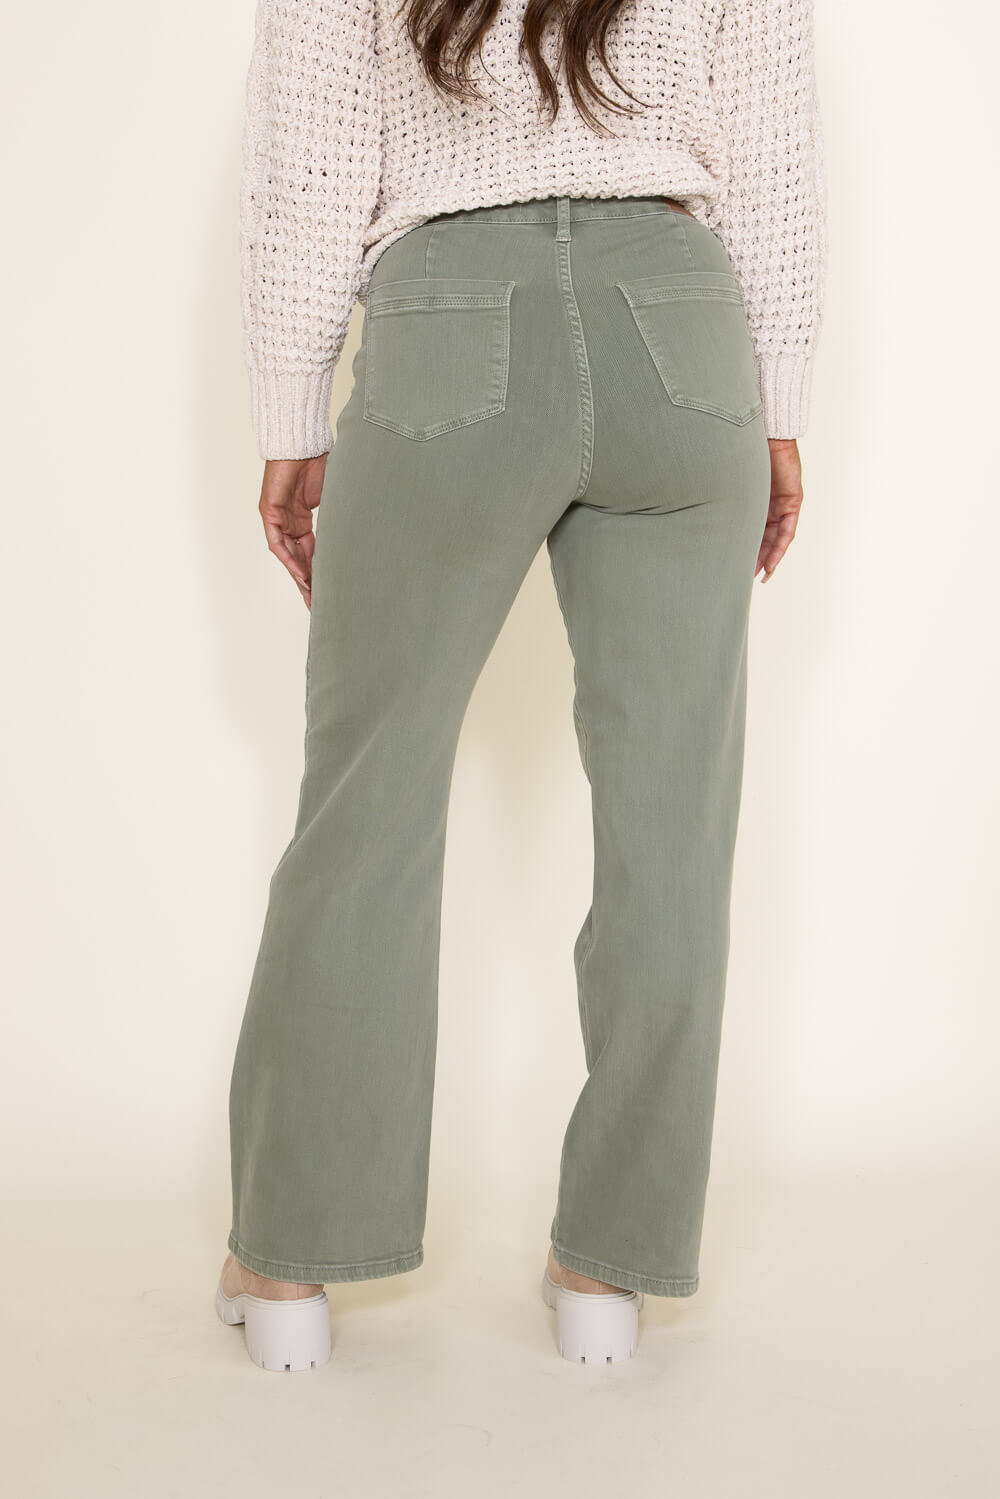 me Women's Cuffed Utility Pants - Sage Green